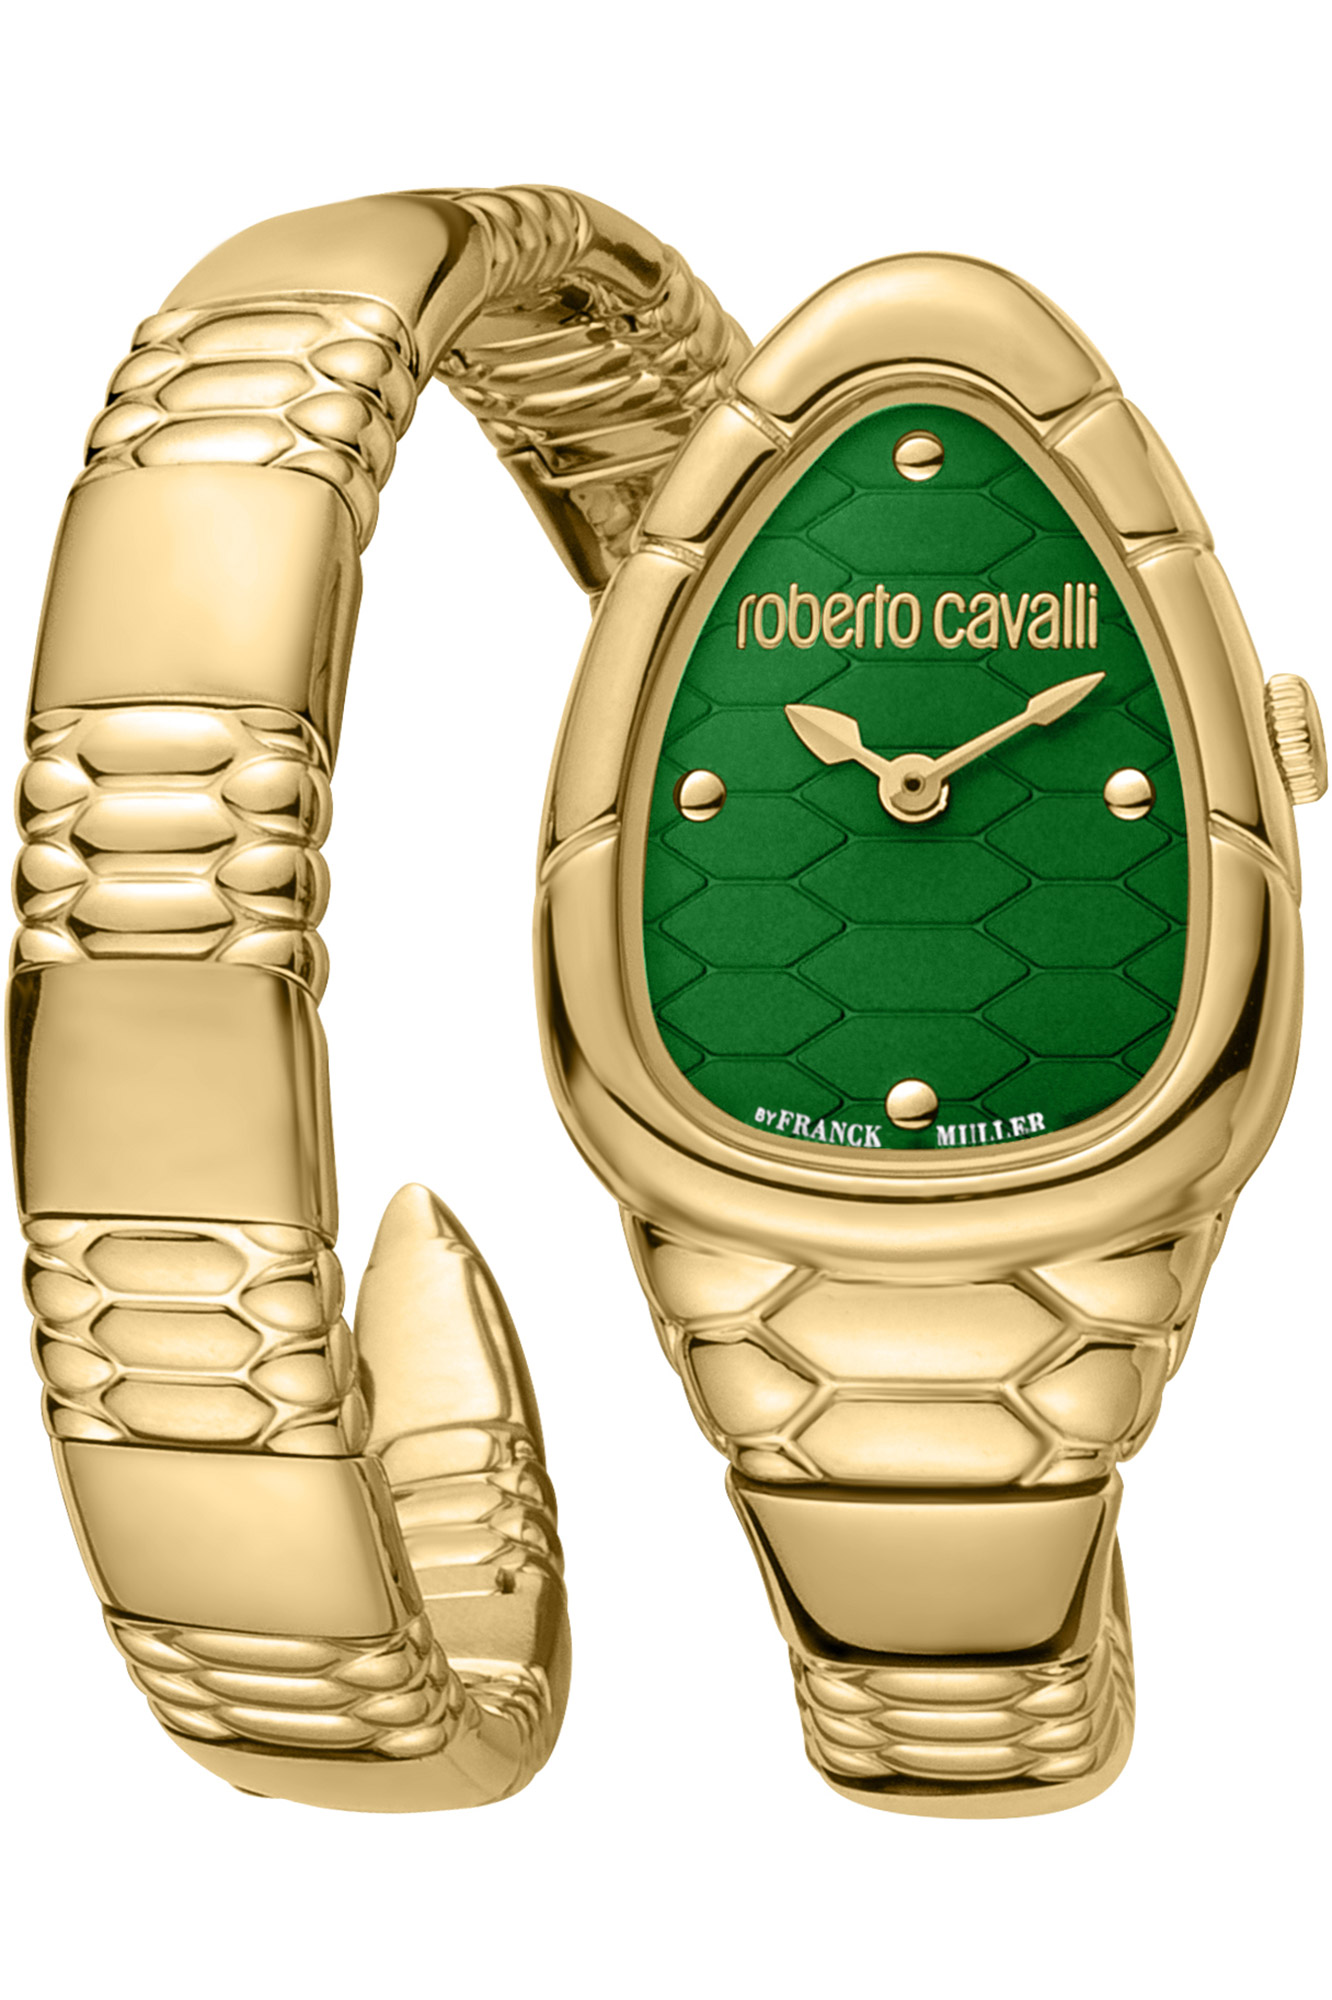 Watch Roberto Cavalli by Franck Muller rv1l184m0041